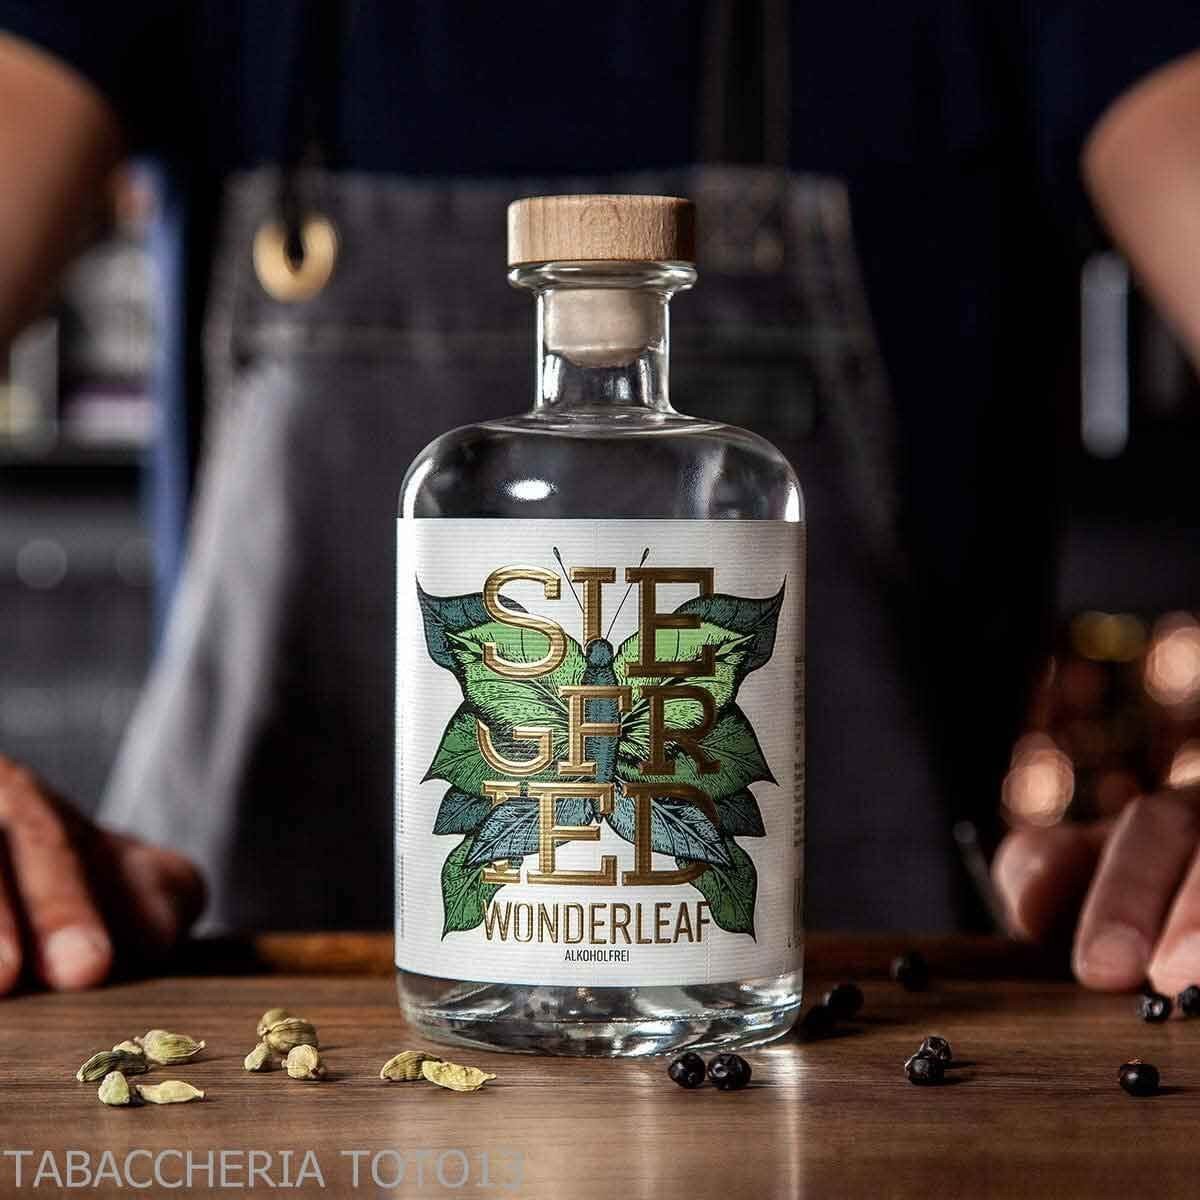 | Siegfried drink Wonderleaf, Non-alcoholic scented alcohol! gin, zero